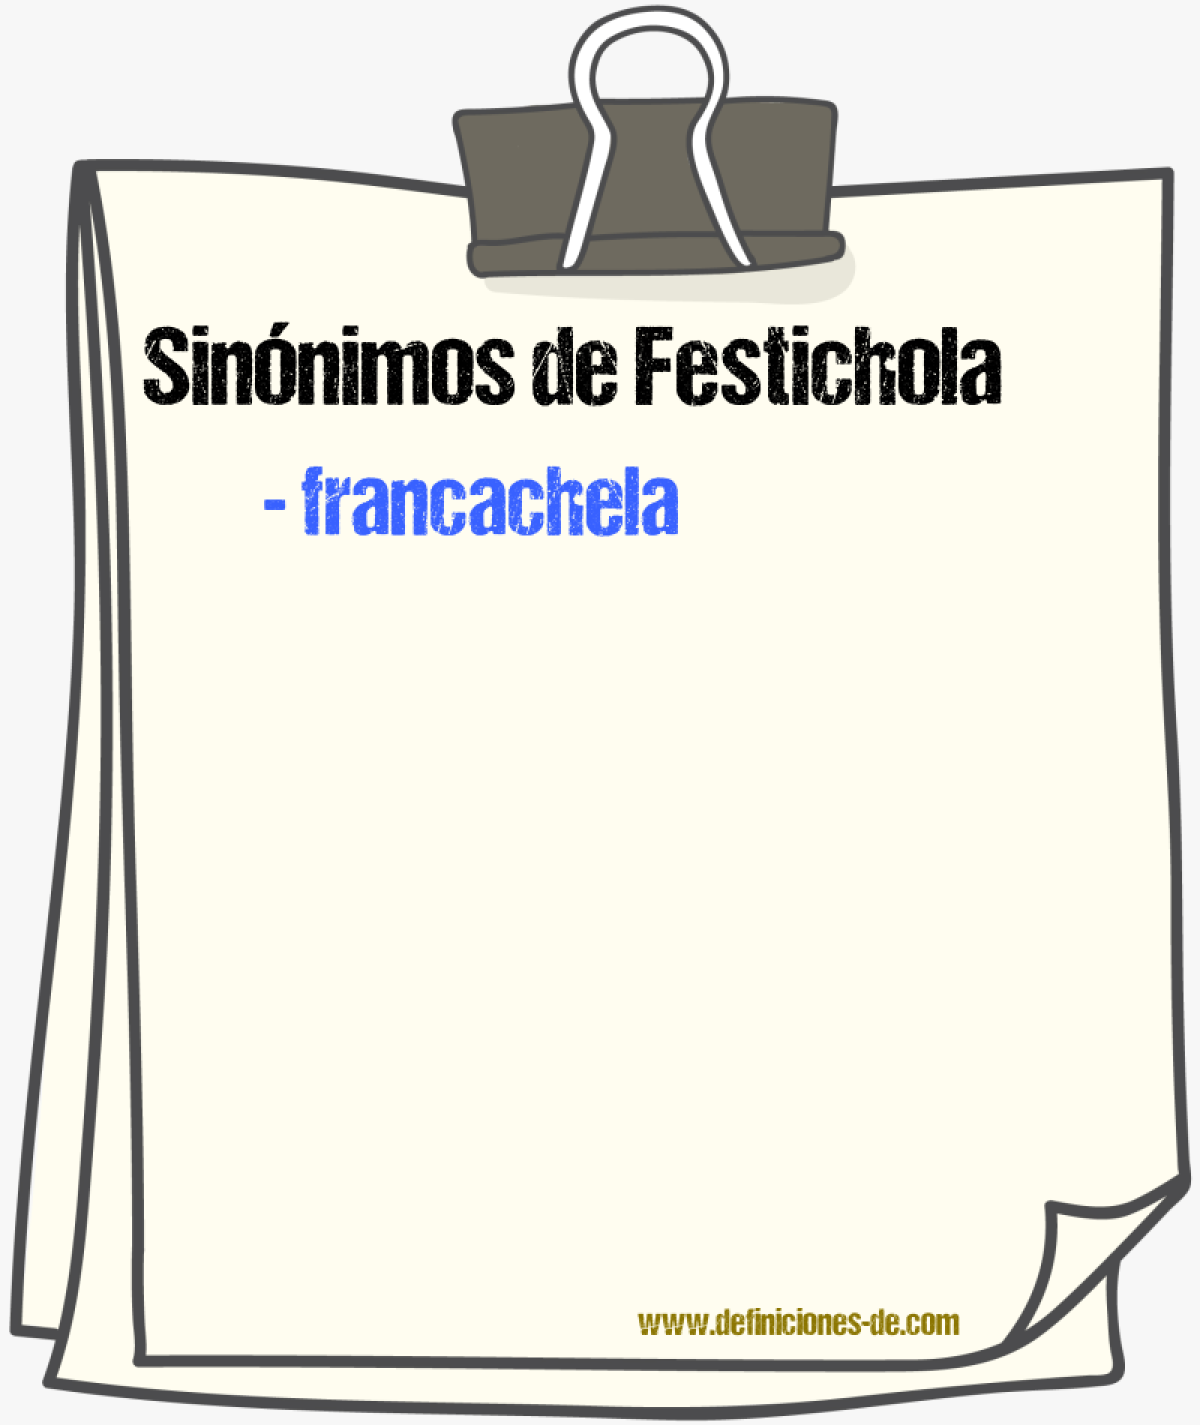 Sinónimos de festichola